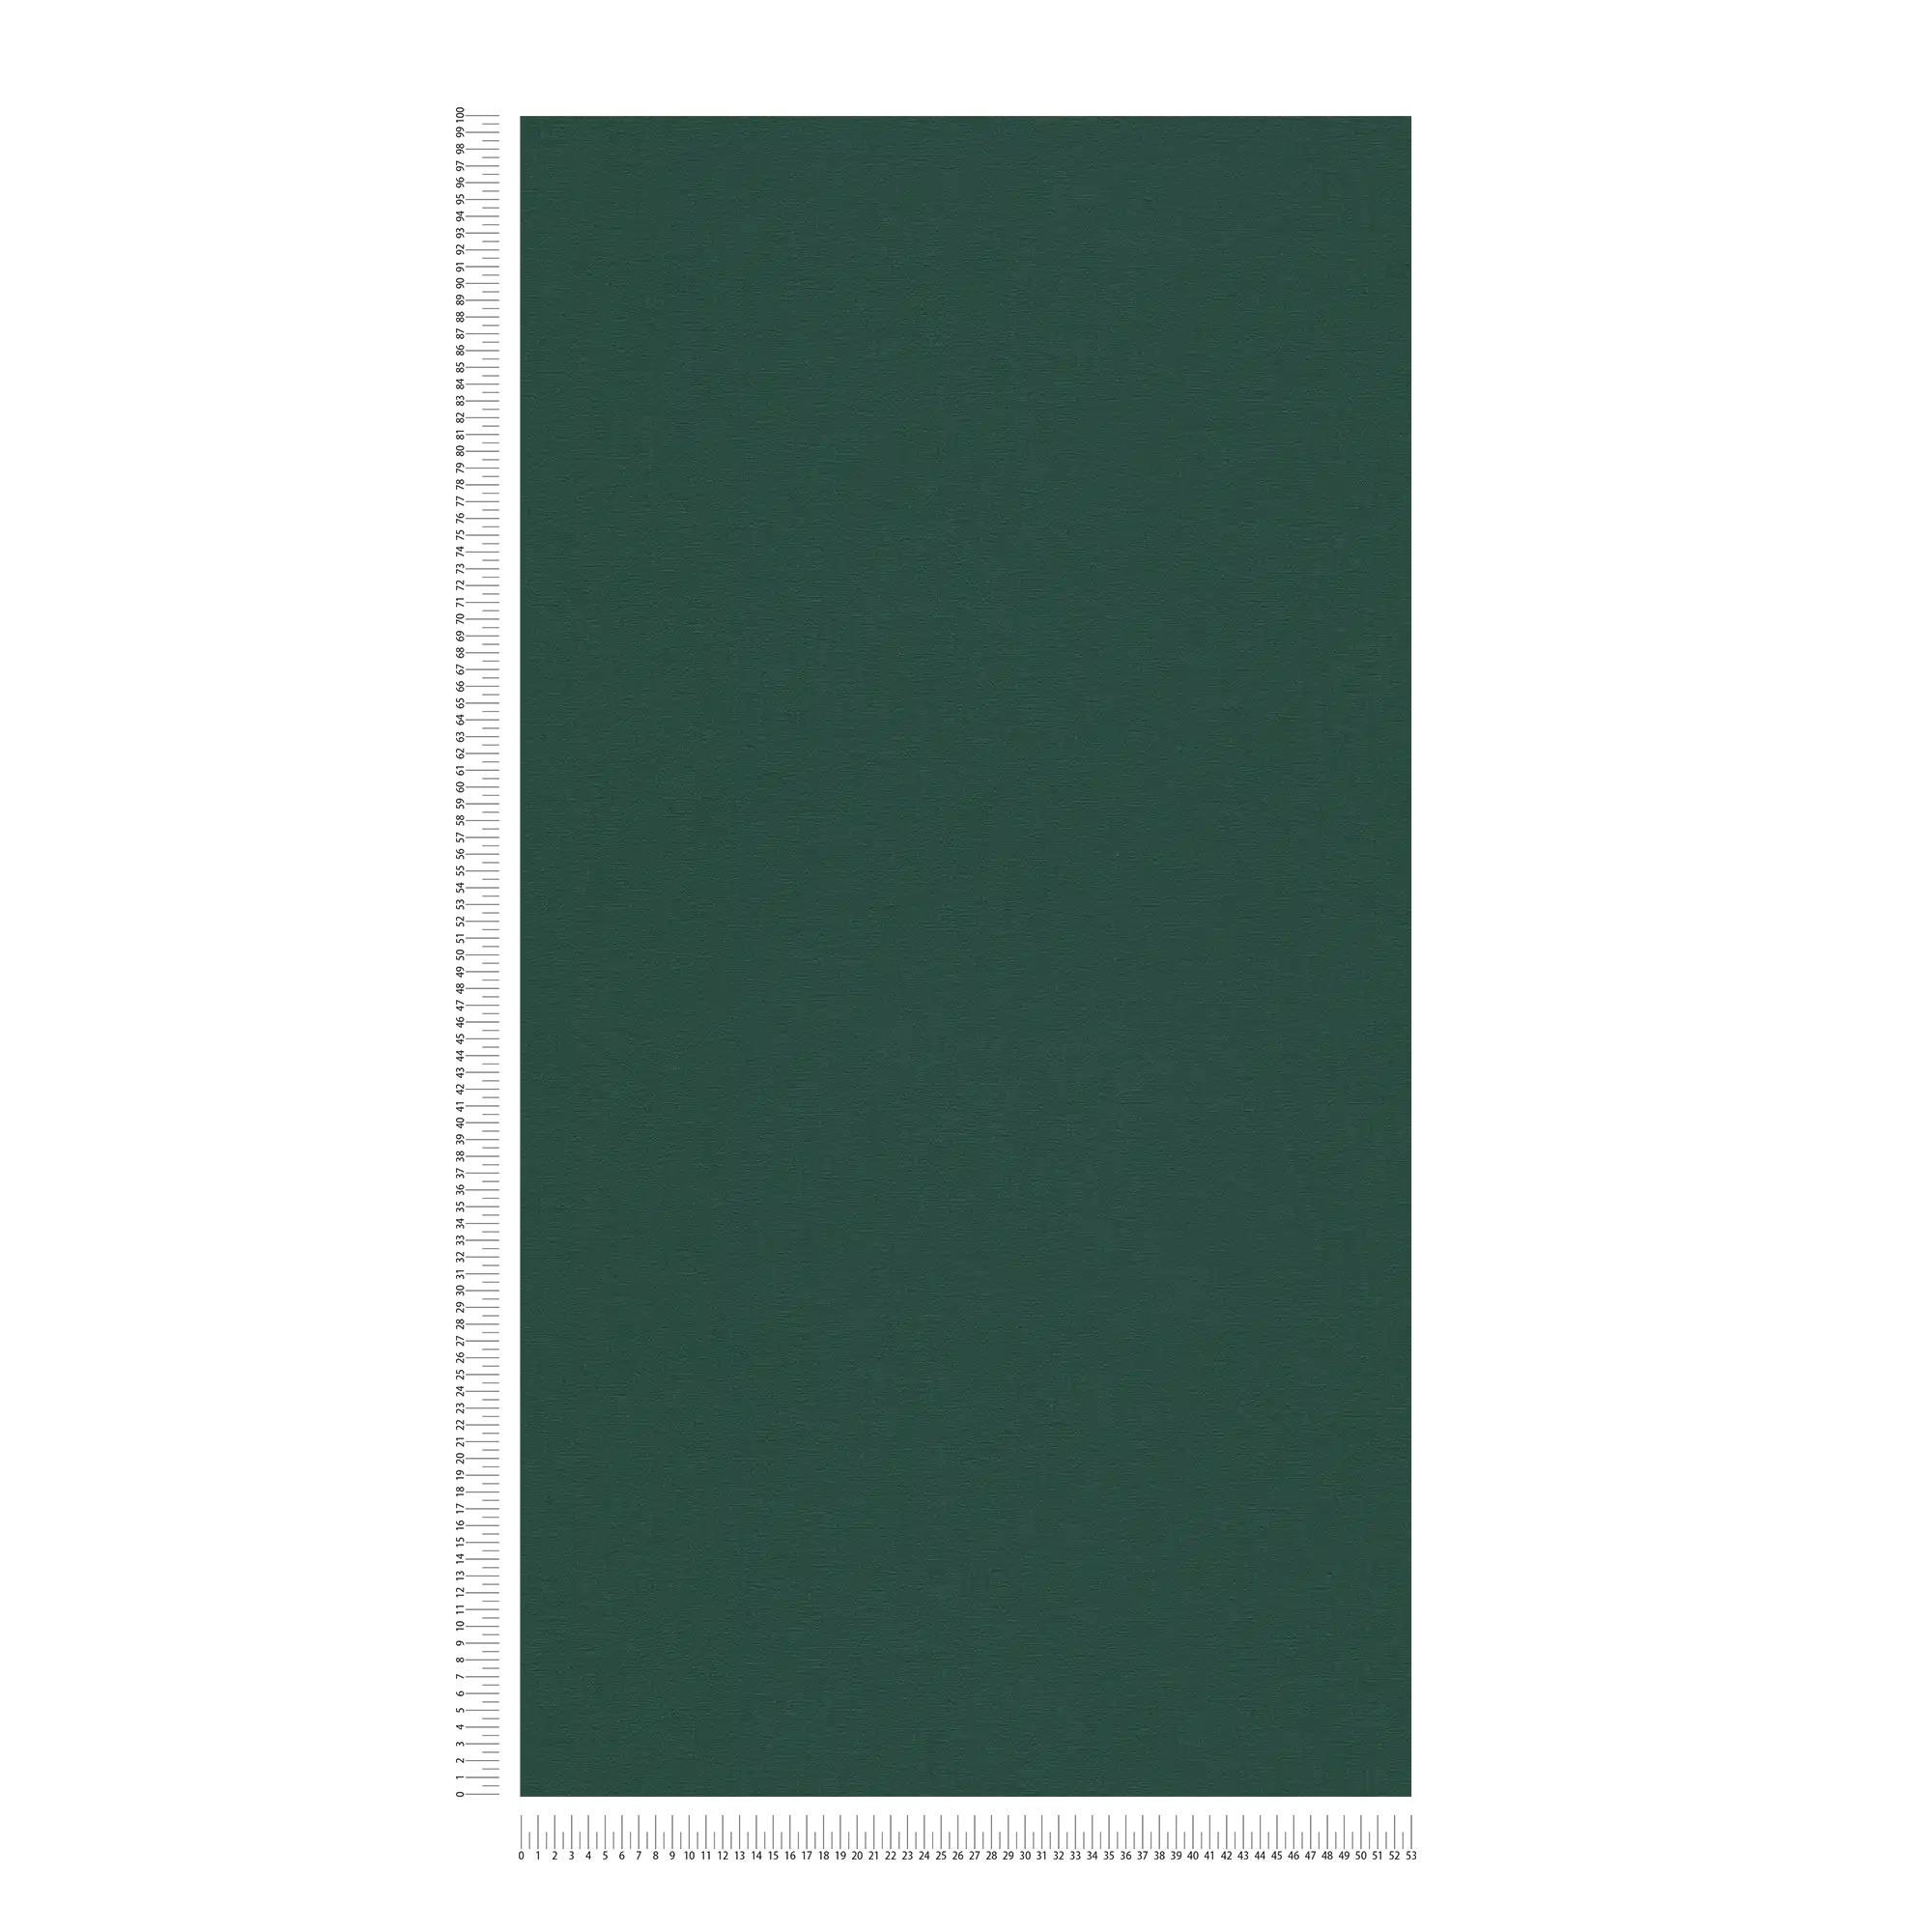             Carta da parati unitaria con texture tessile opaca - verde, verde scuro
        